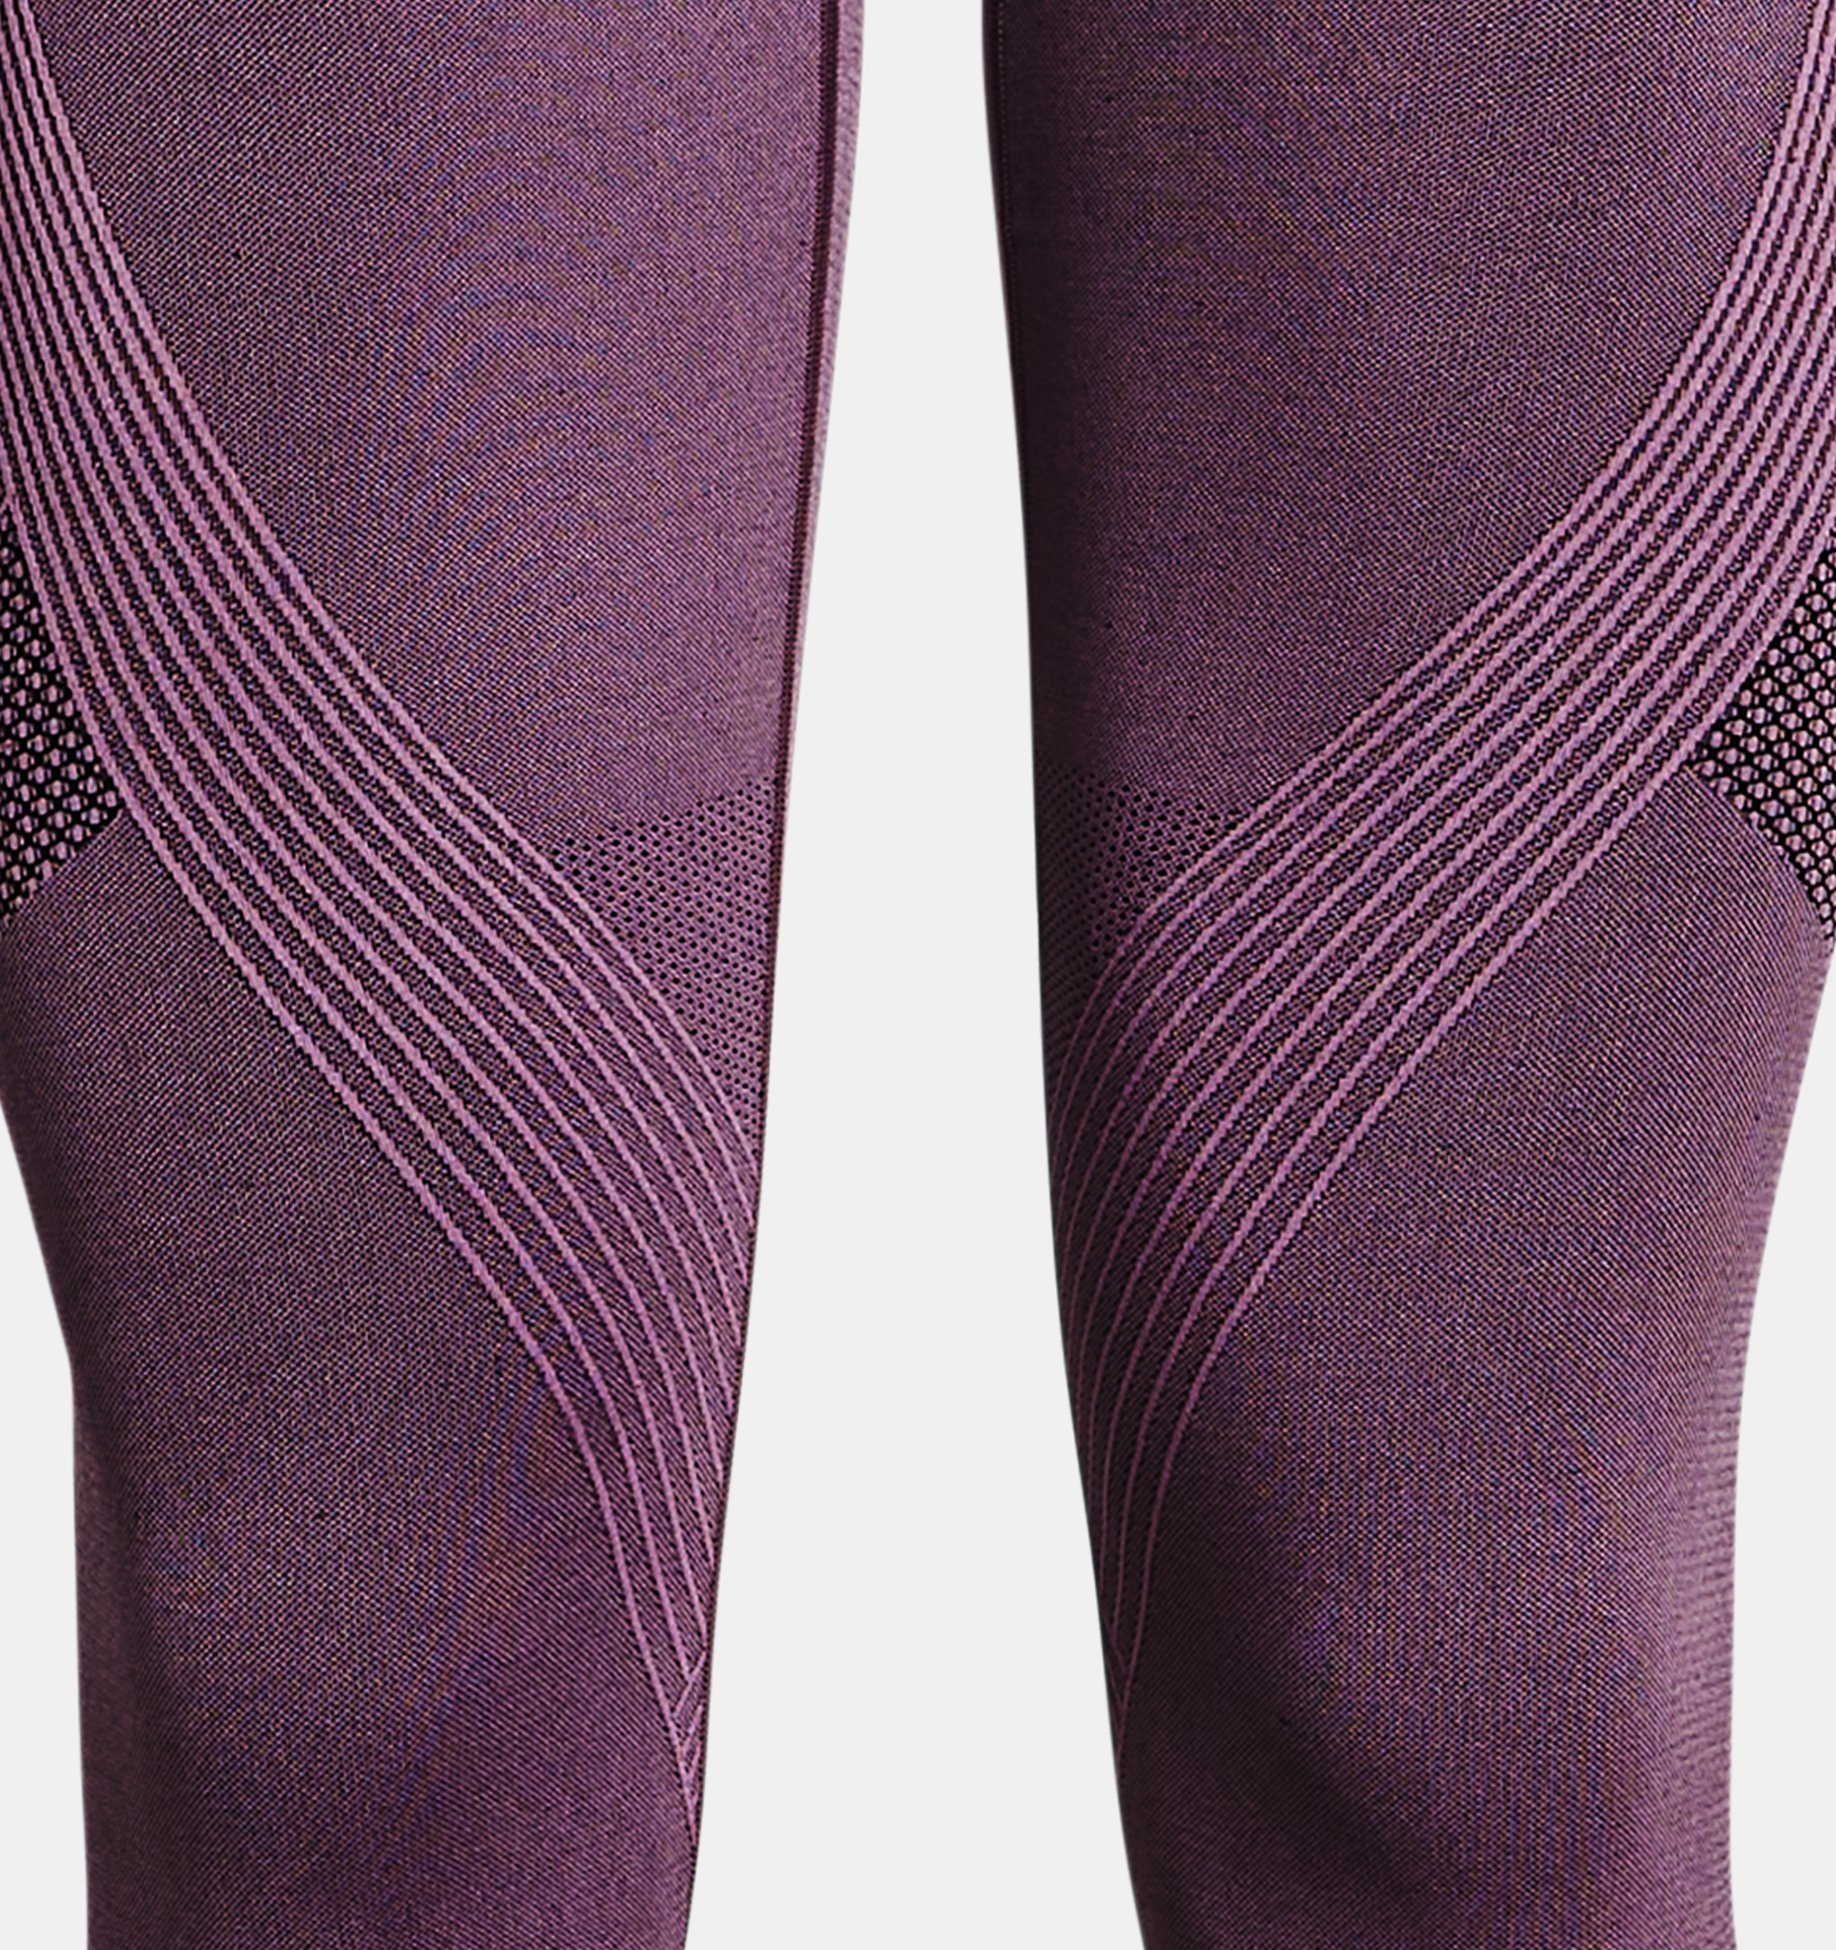  UA Rush Ankle Legging, Gray - women's compression leggings  - UNDER ARMOUR - 55.17 € - outdoorové oblečení a vybavení shop